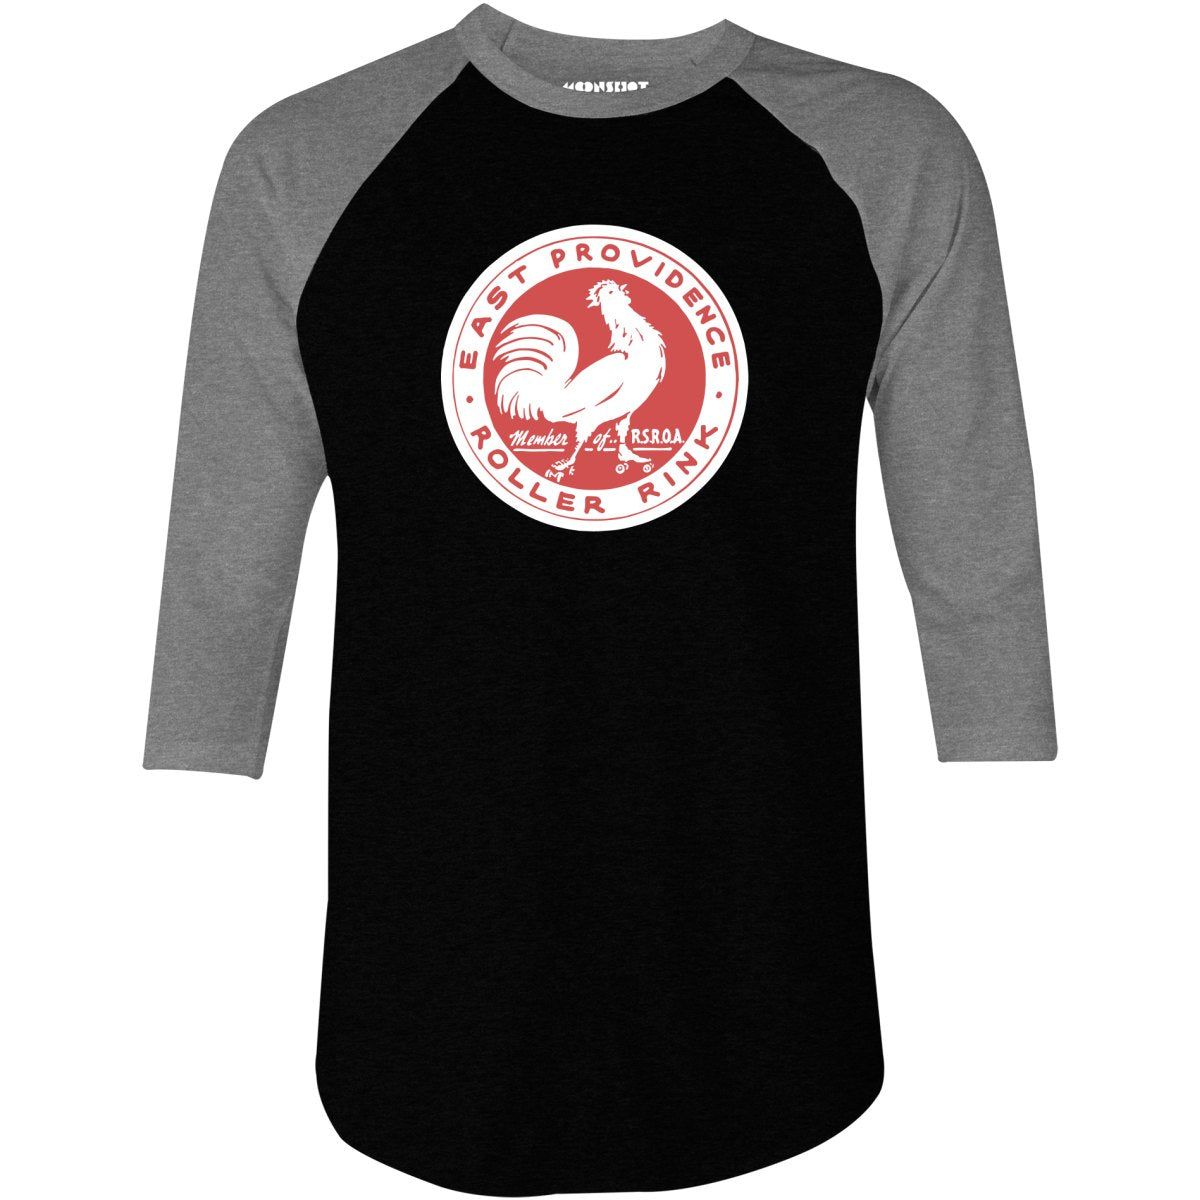 East Providence - Rhode Island - Vintage Roller Rink - 3/4 Sleeve Raglan T-Shirt